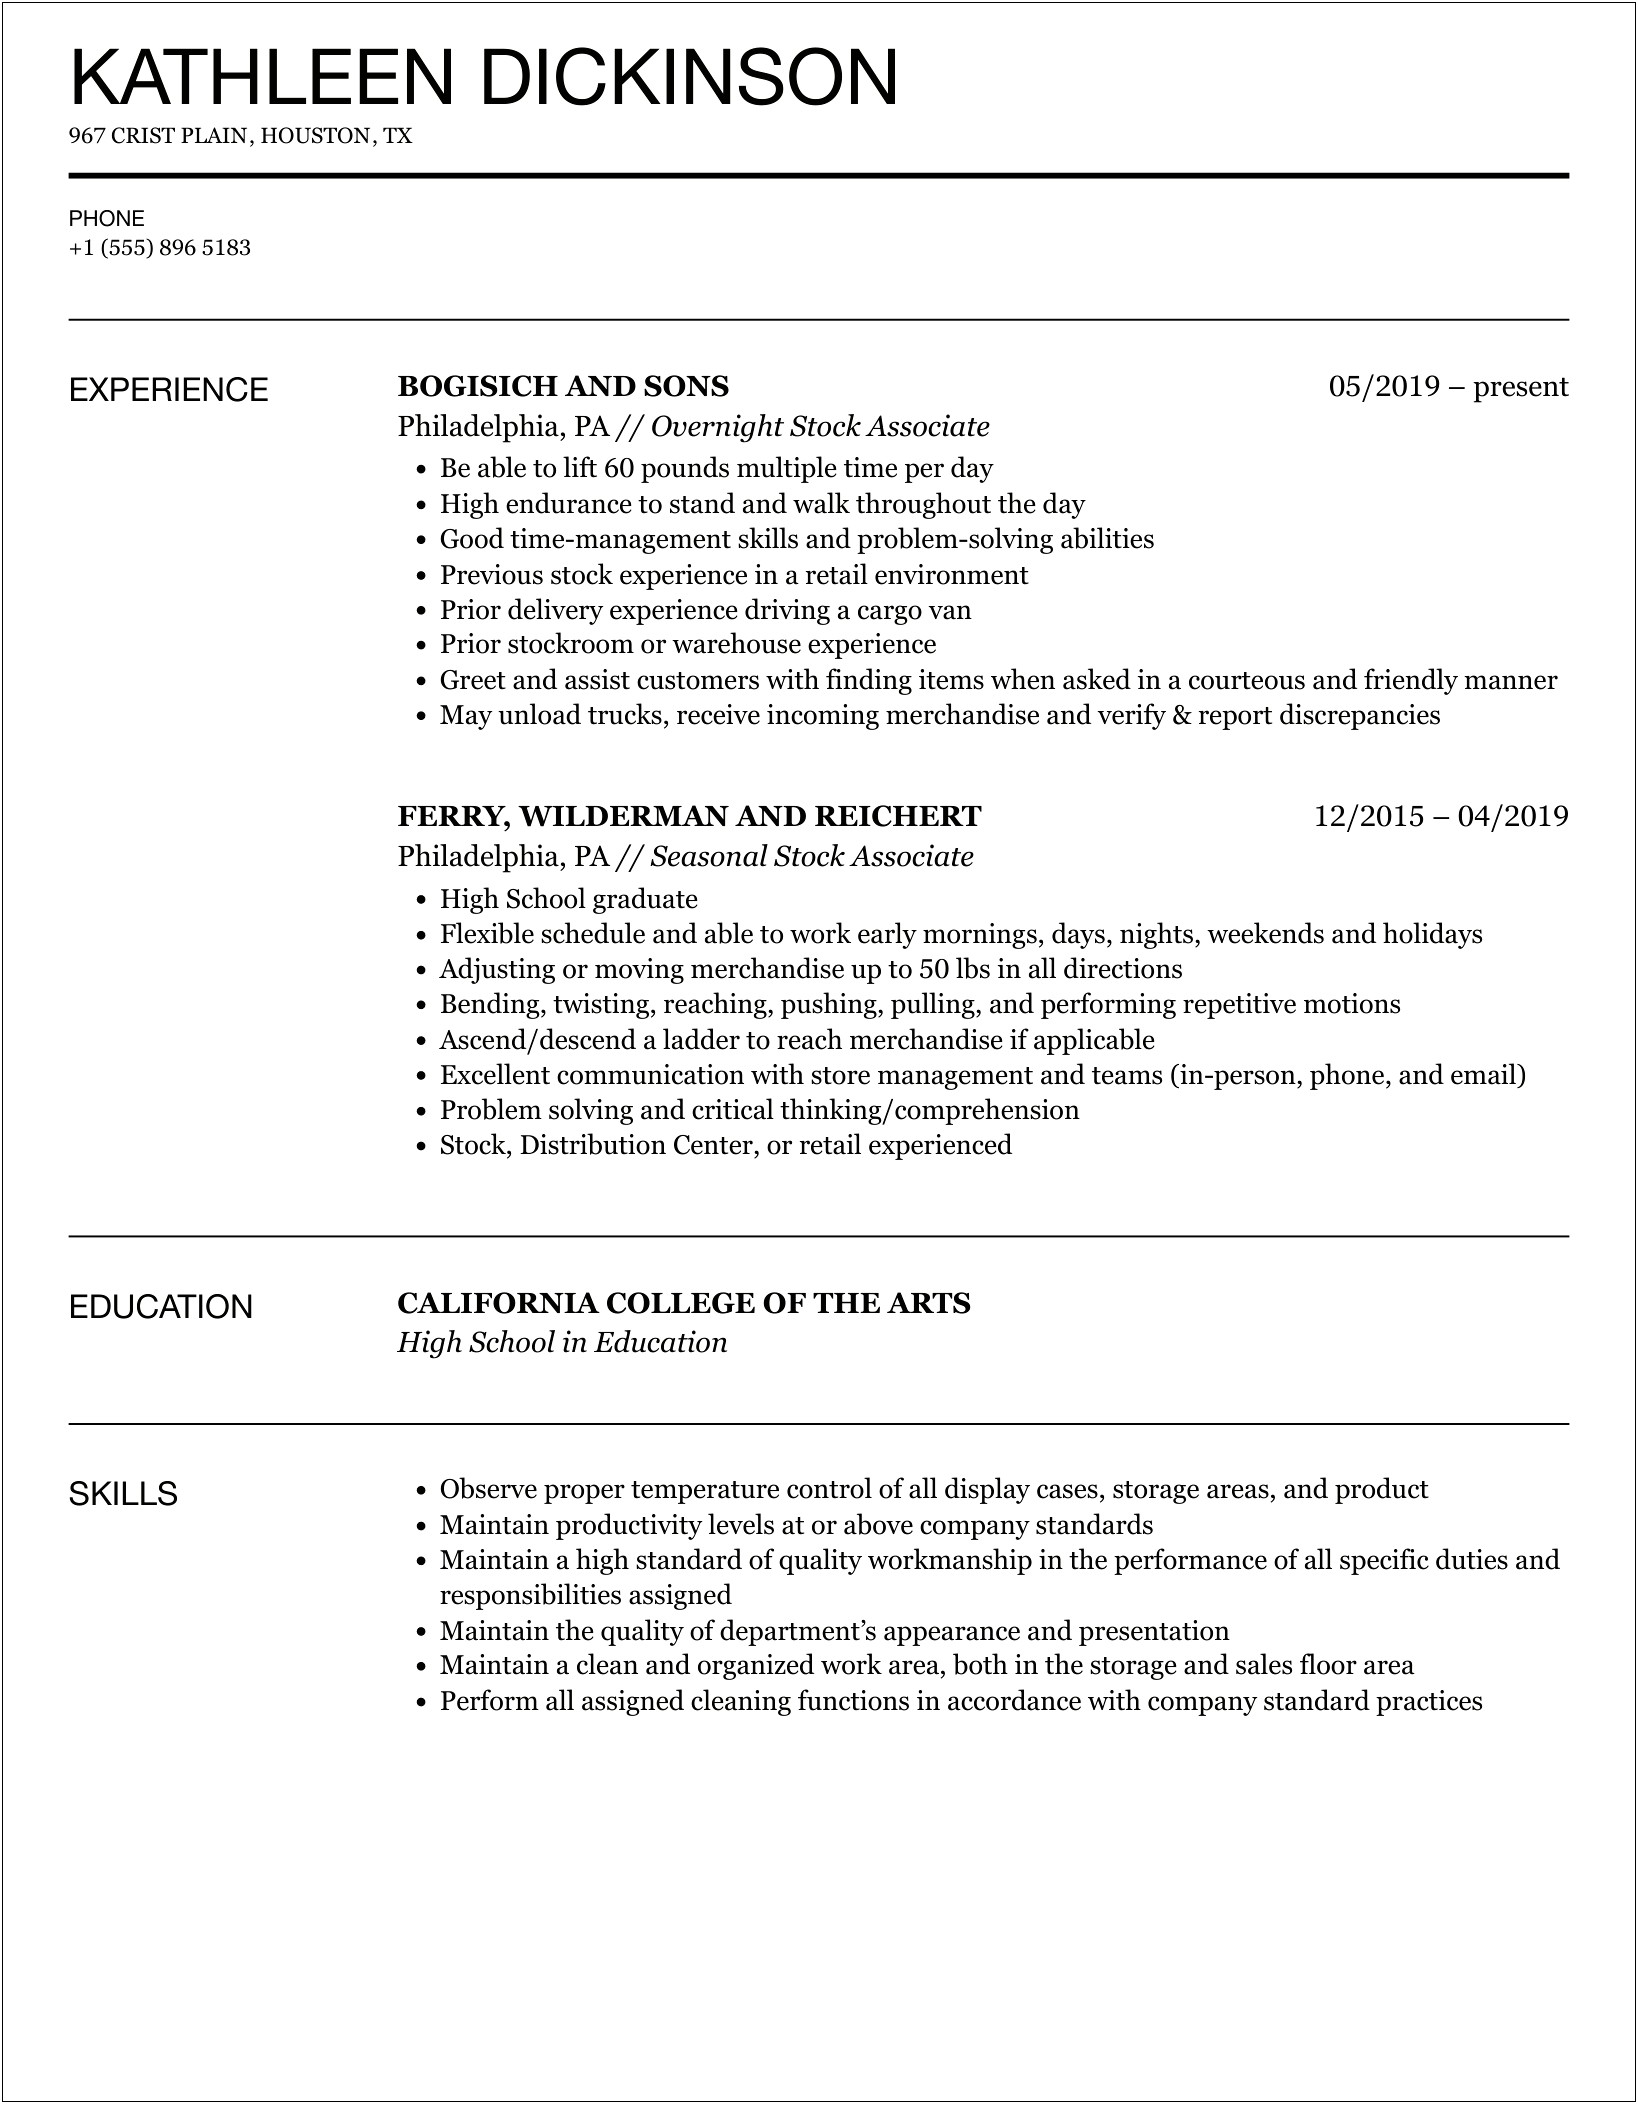 Stocking Associate Job Description For Resume